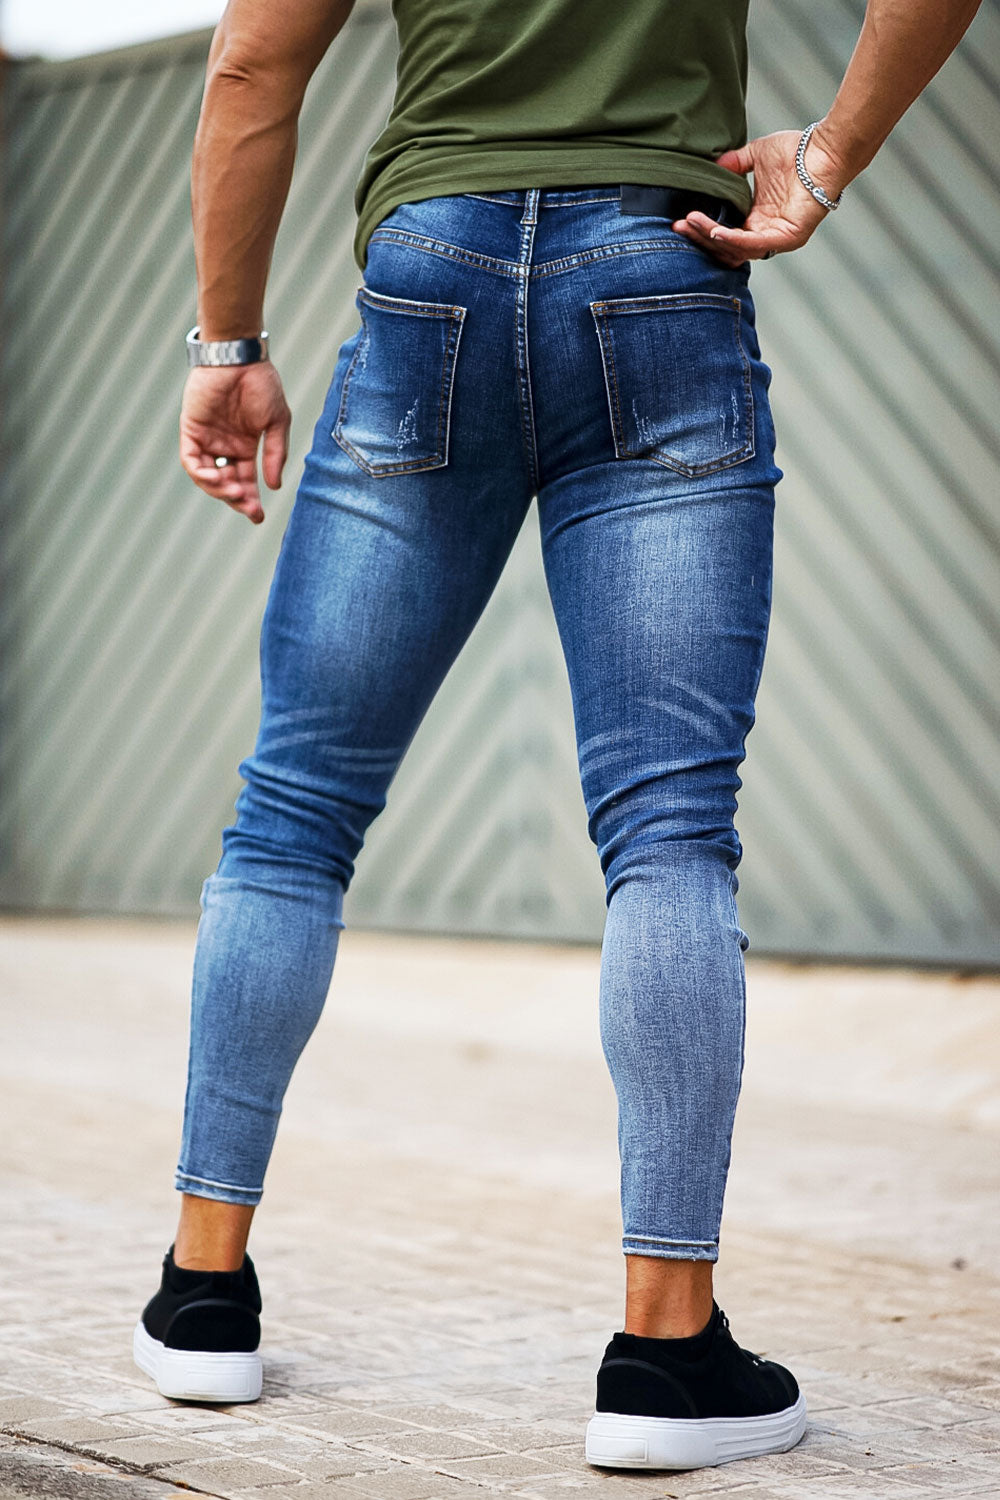 stylish skinny jeans - blue